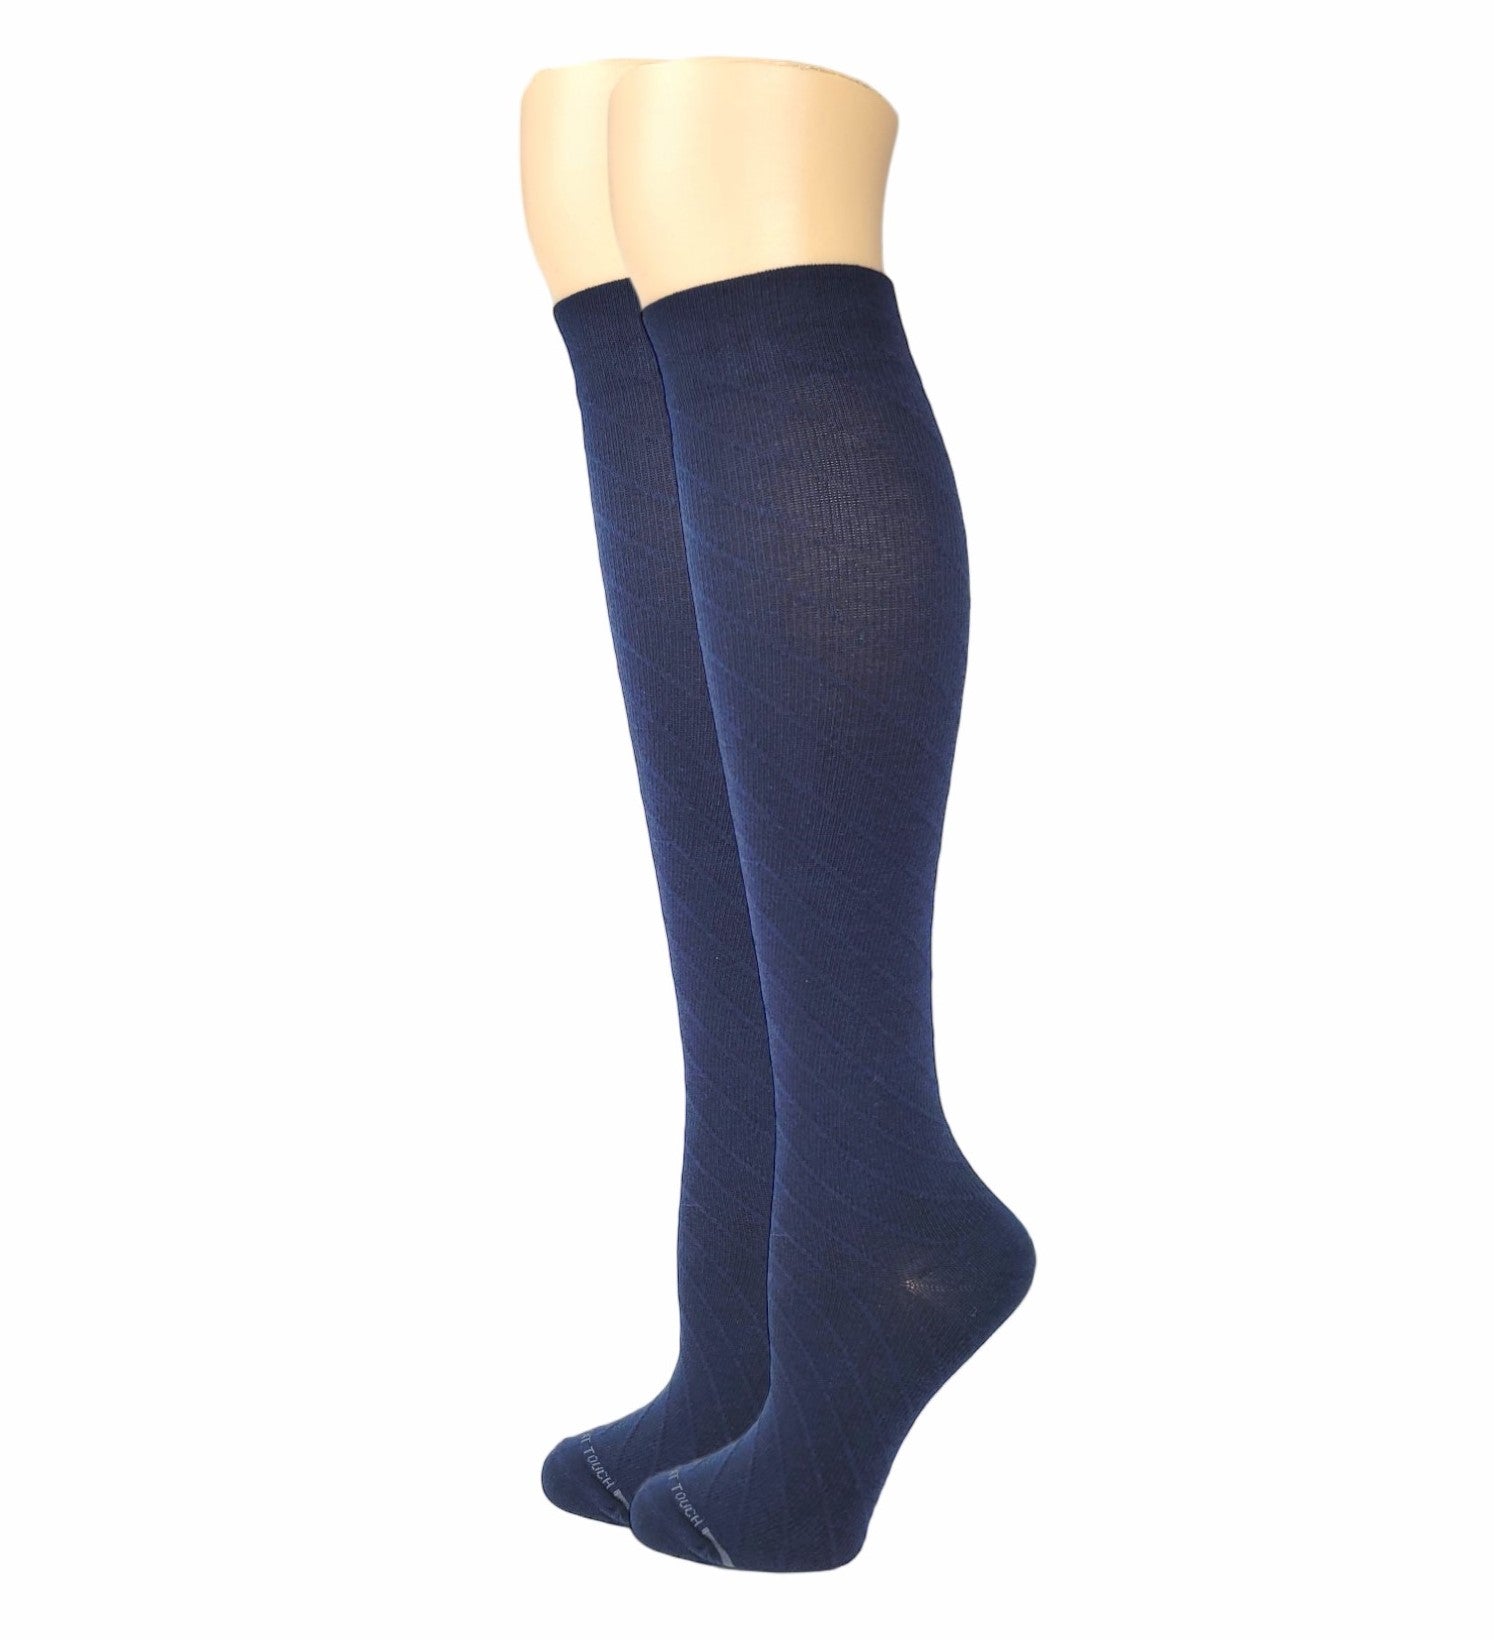 Knee High Compression Socks for Women